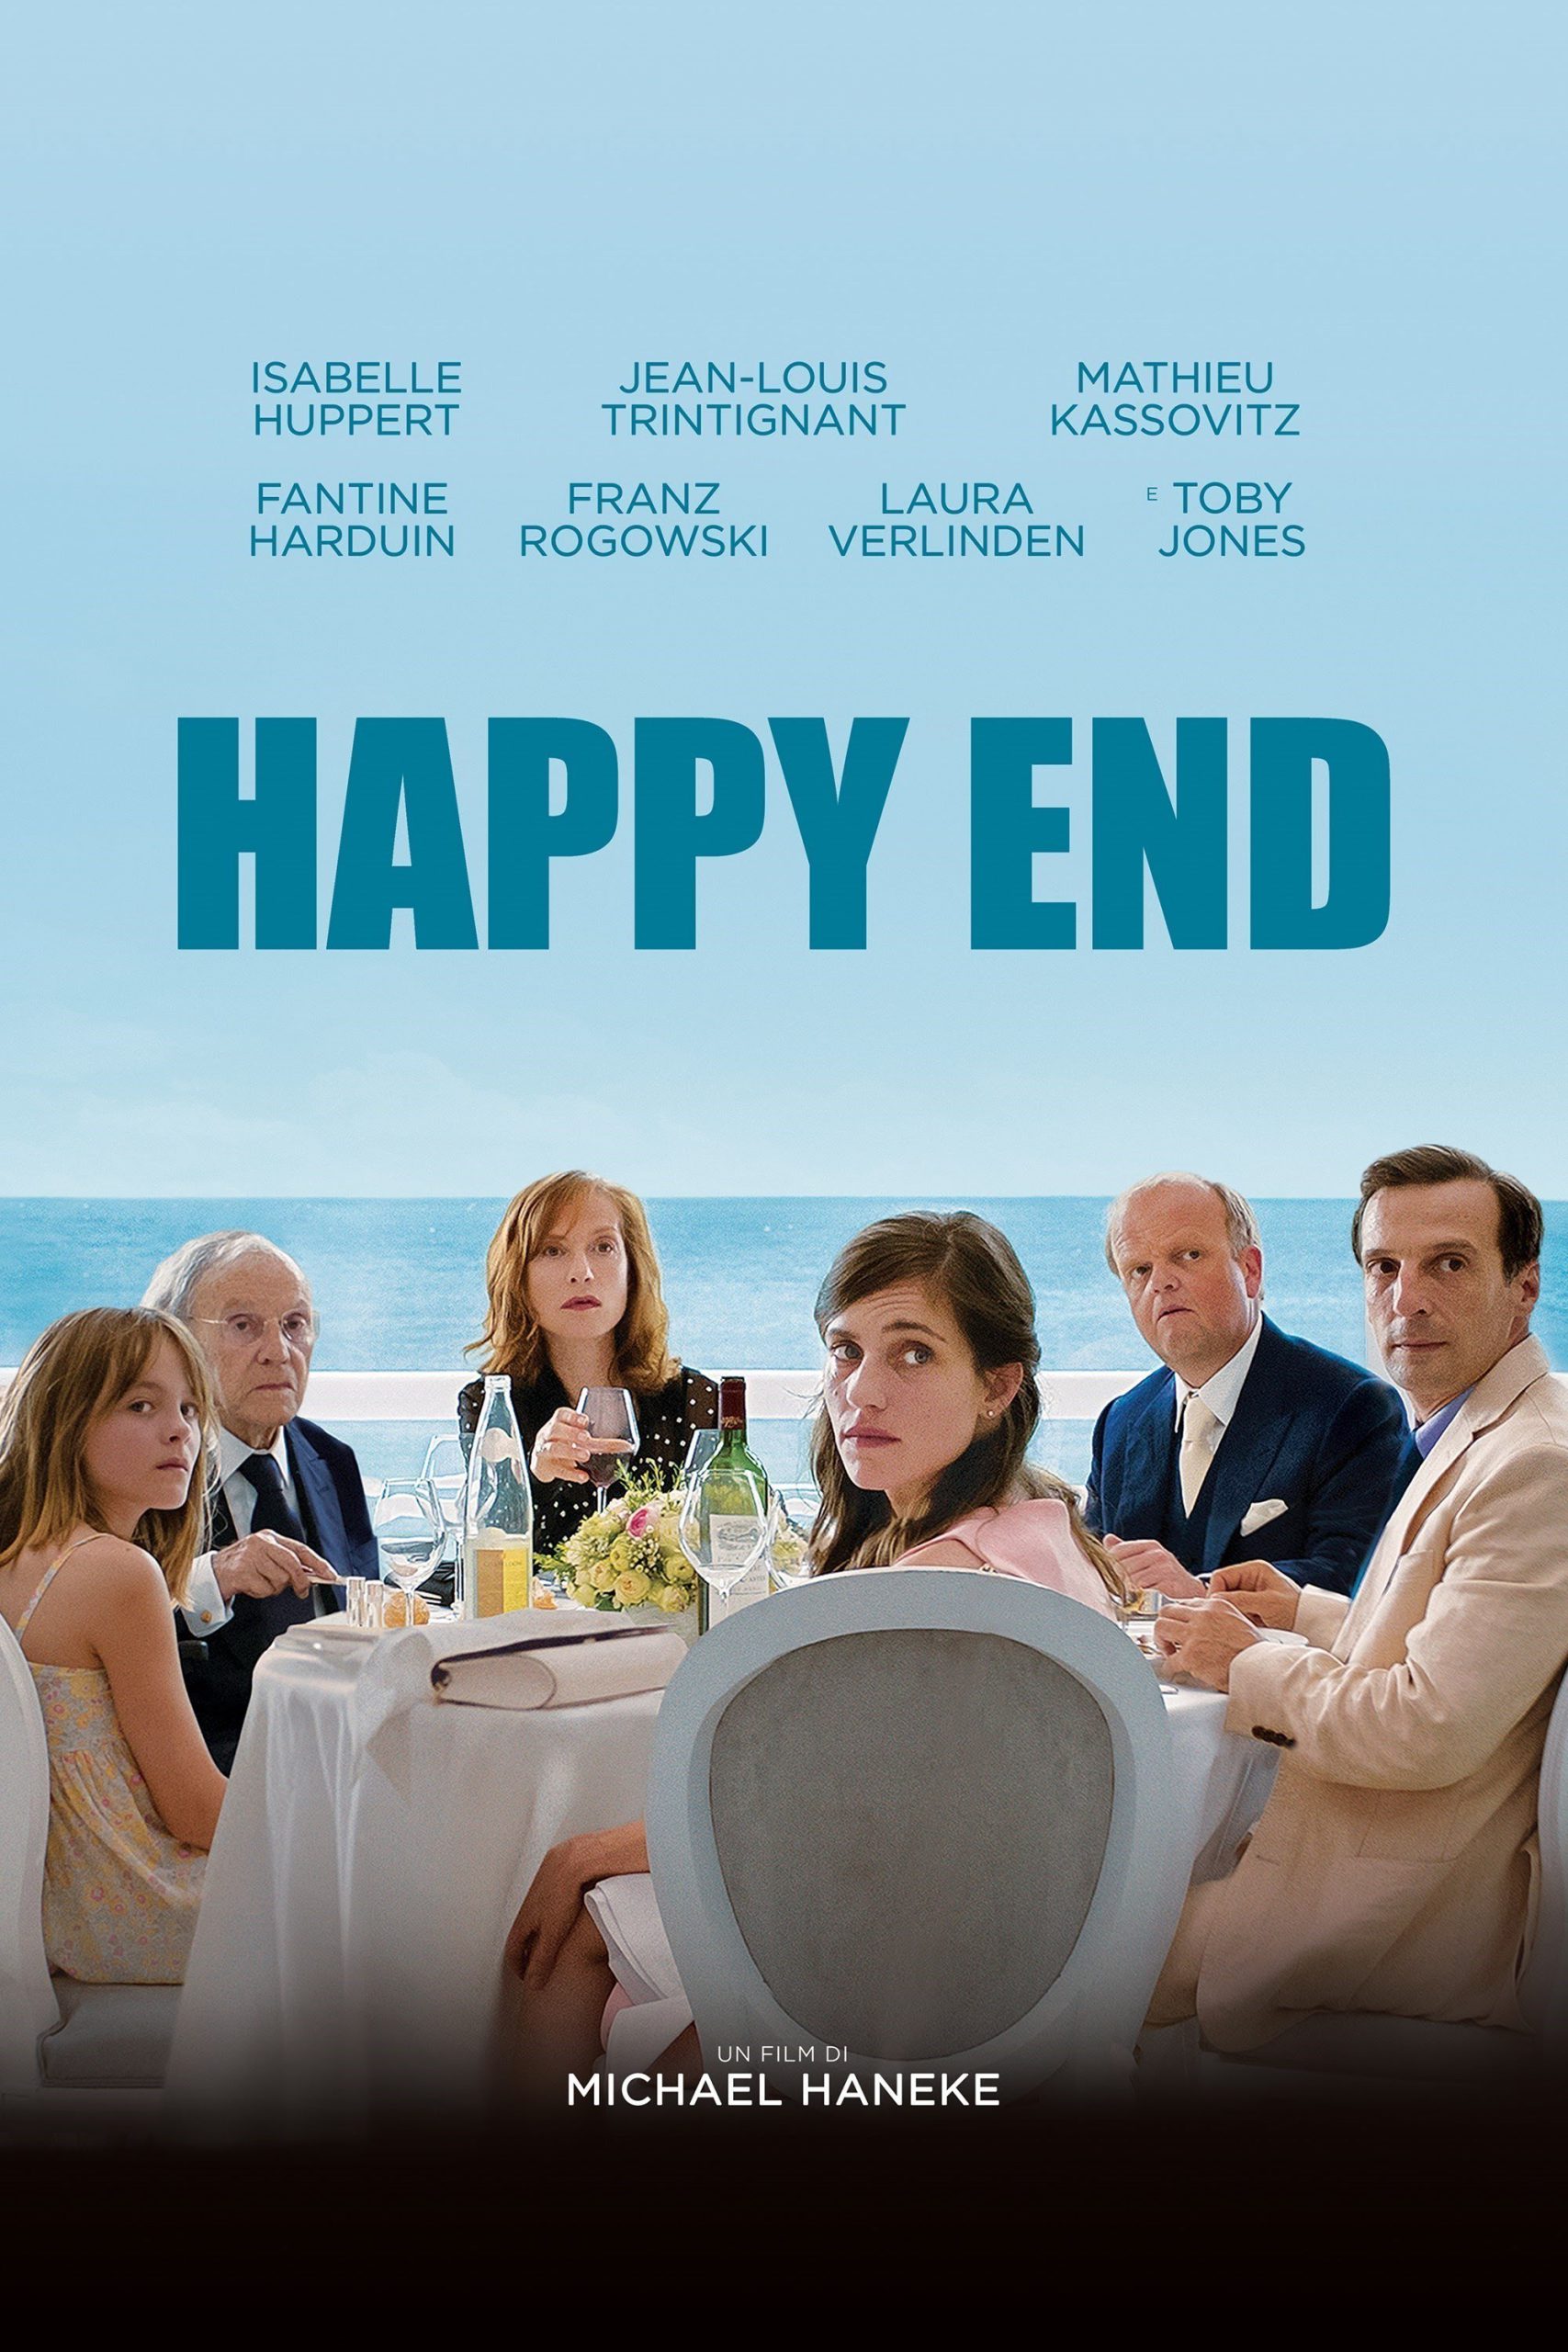 Happy End [HD] (2017)